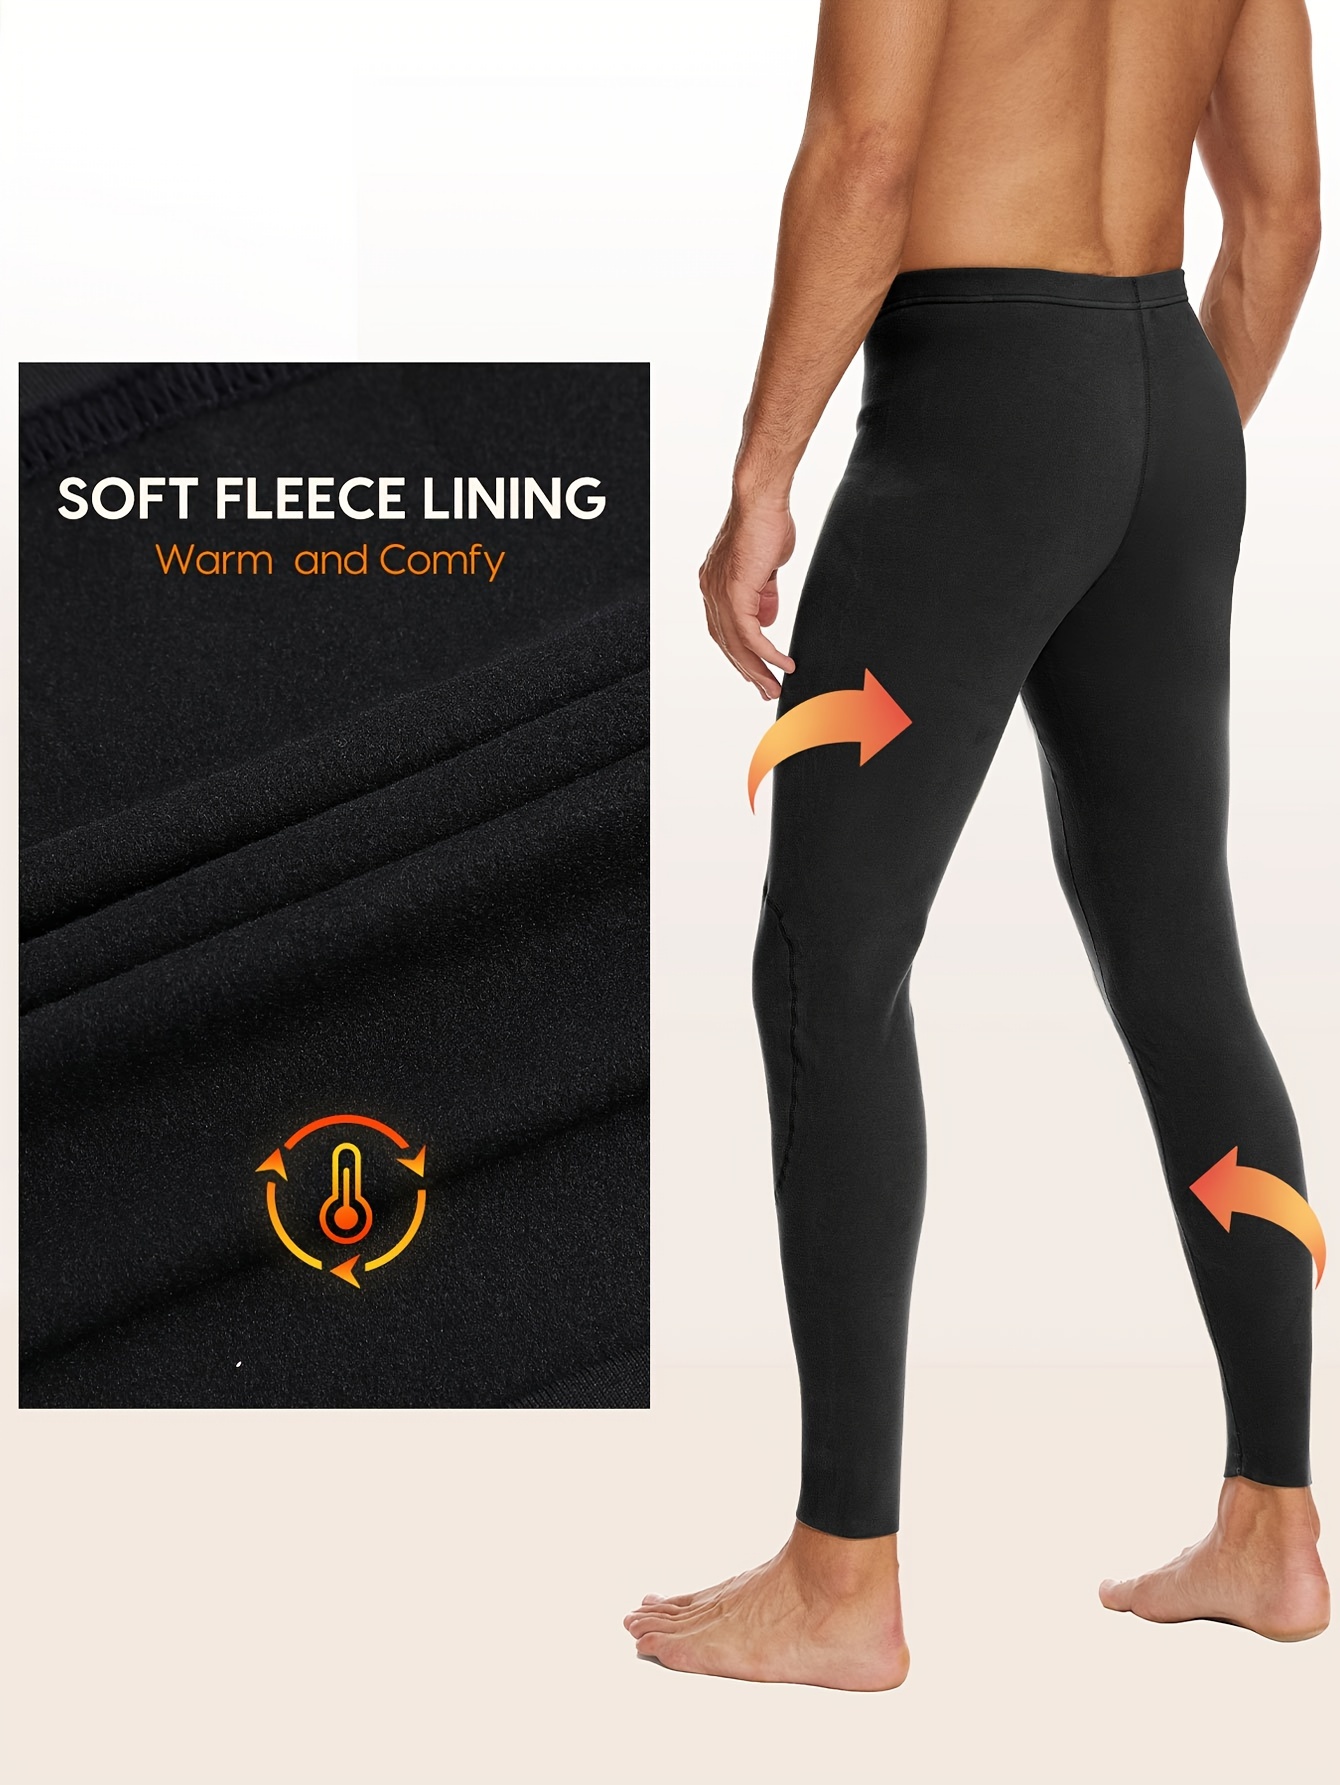 Thermal Pants for Women Fleece Lined Leggings Underwear Soft Bottoms 